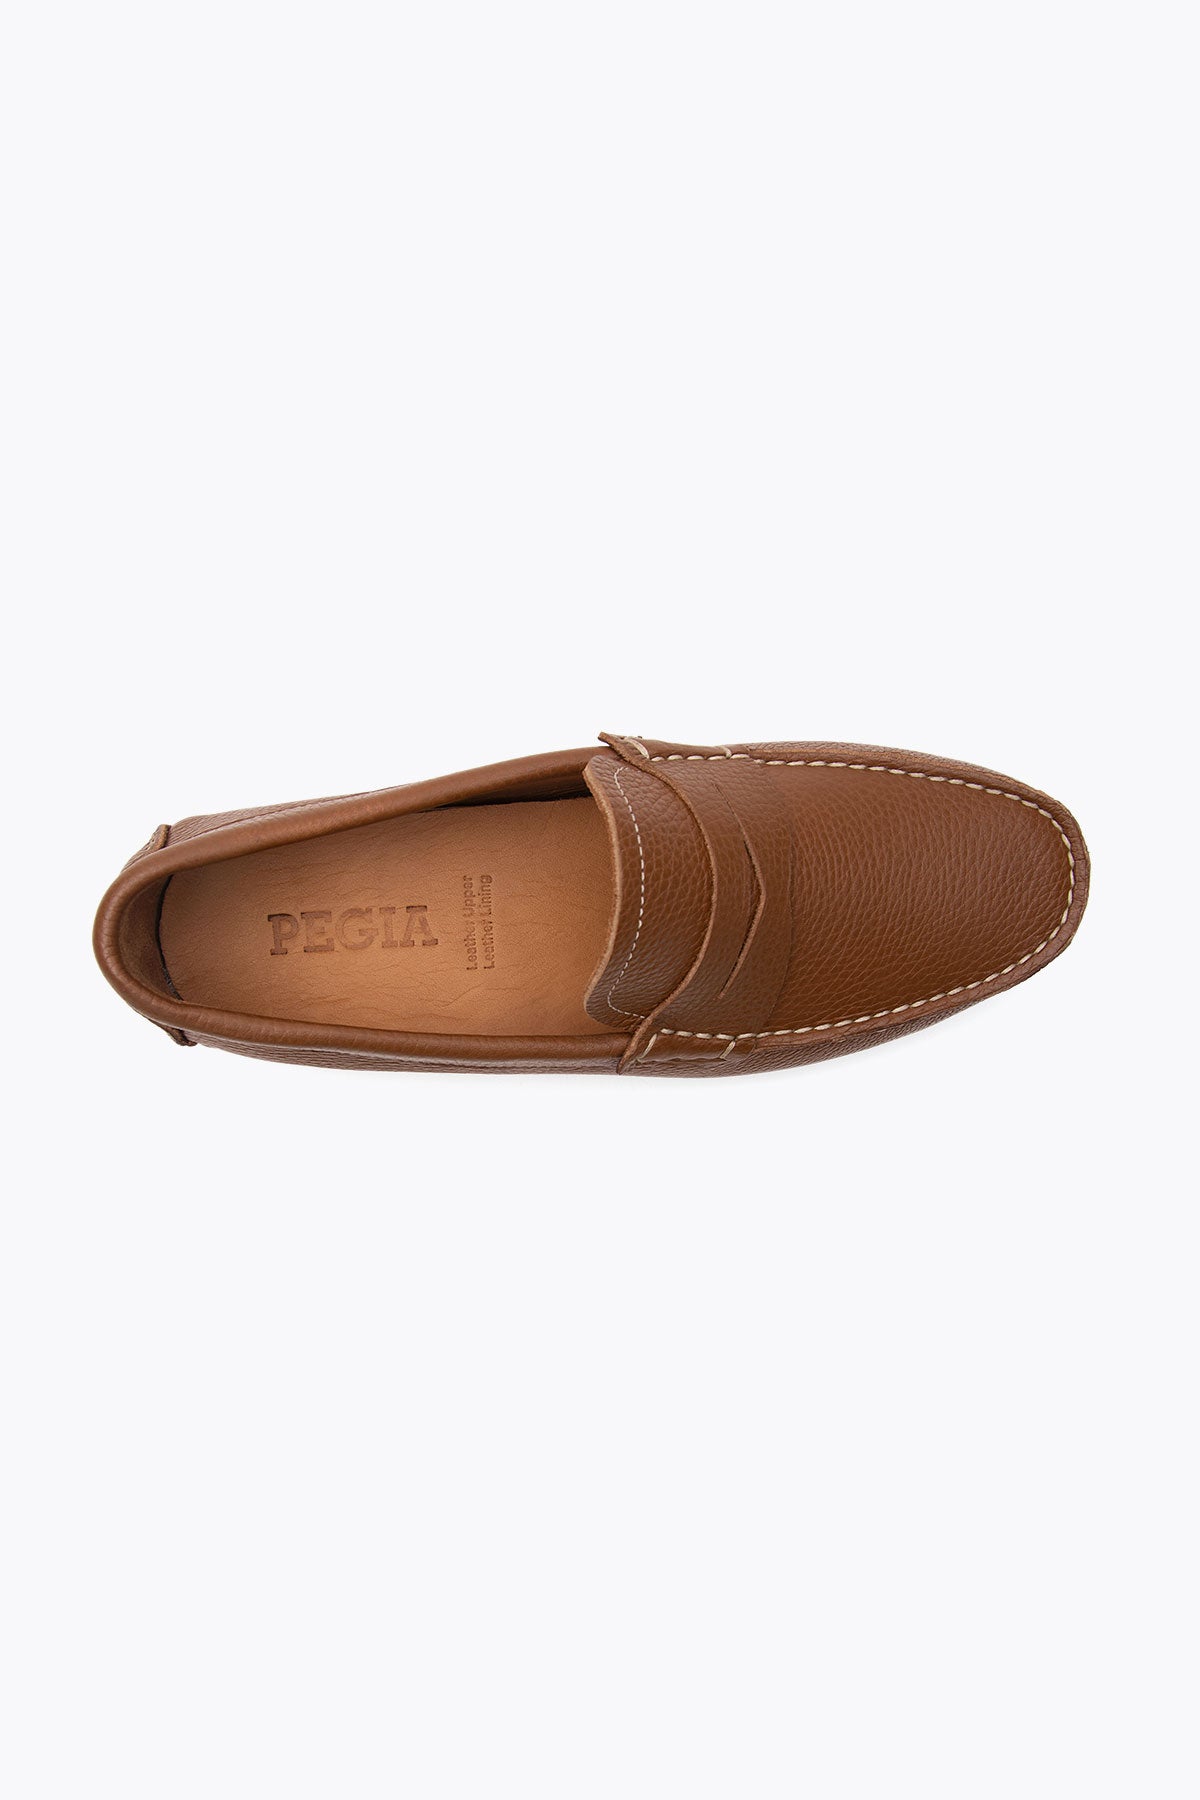 Pegia Alvor Leather Men's Loafers